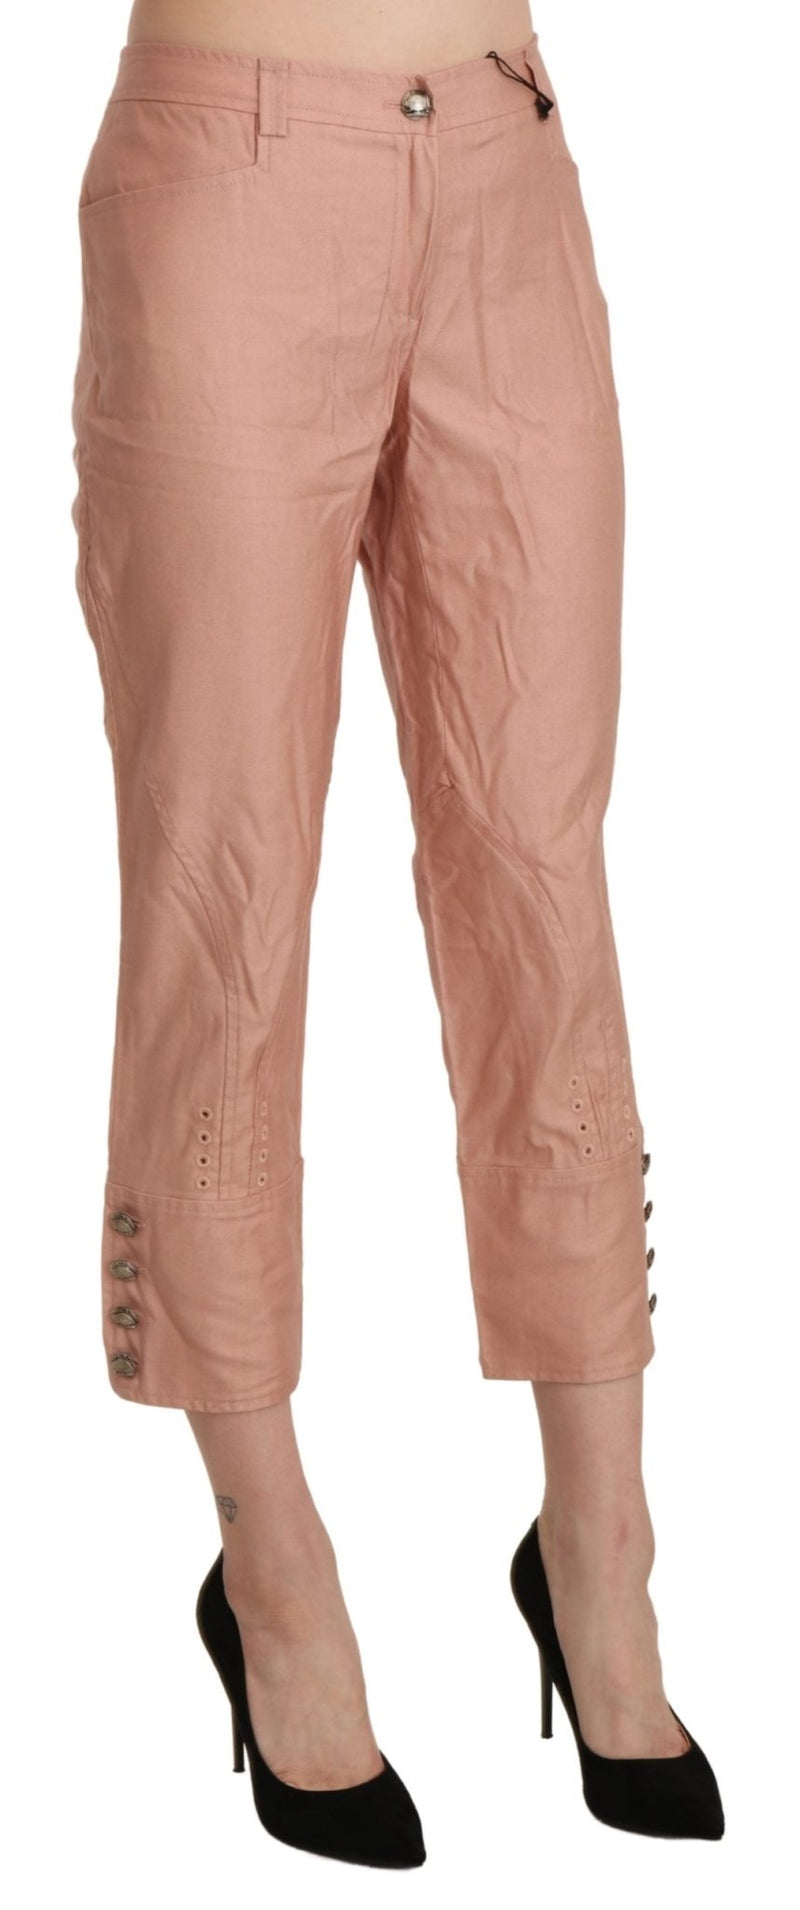 Cotton Pink High Waist Cropped Trouser Pants - Avaz Shop